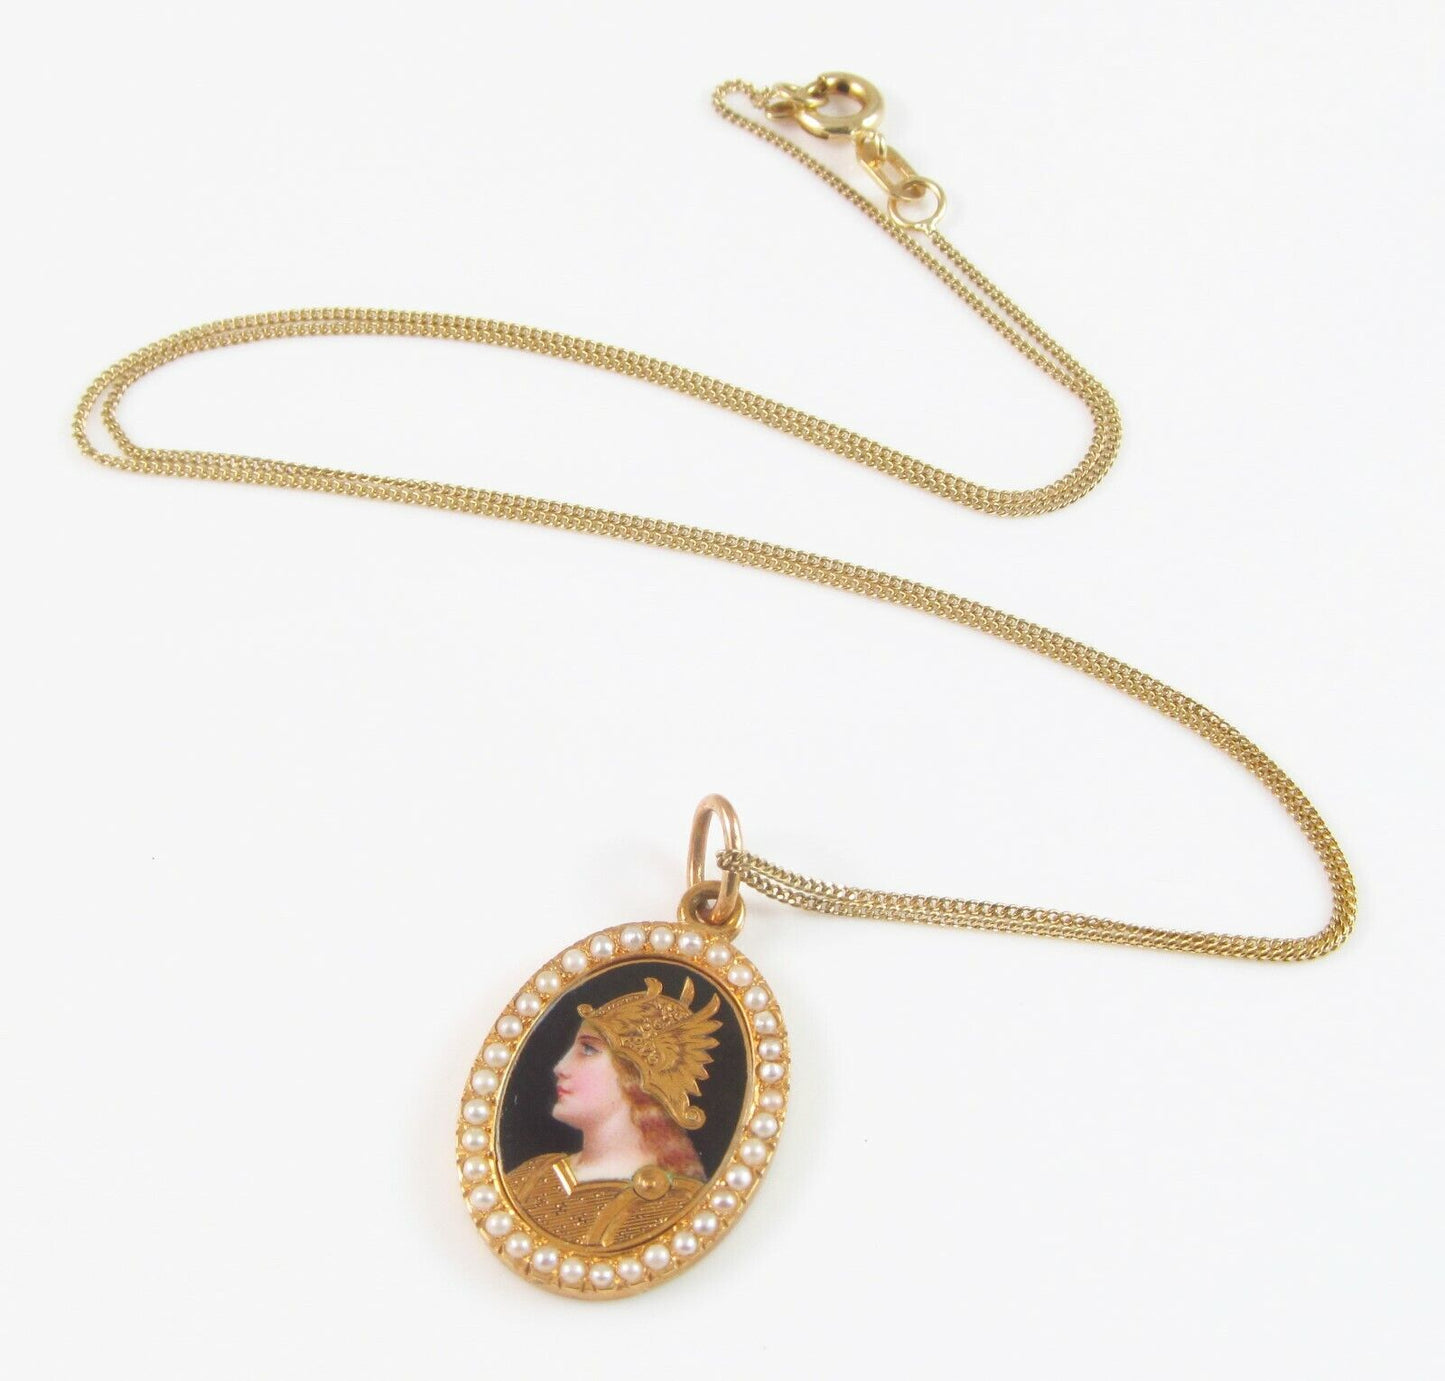 Antique 18k Gold Swiss Enamel & Pearl Portrait Athena Goddess Pendant Necklace